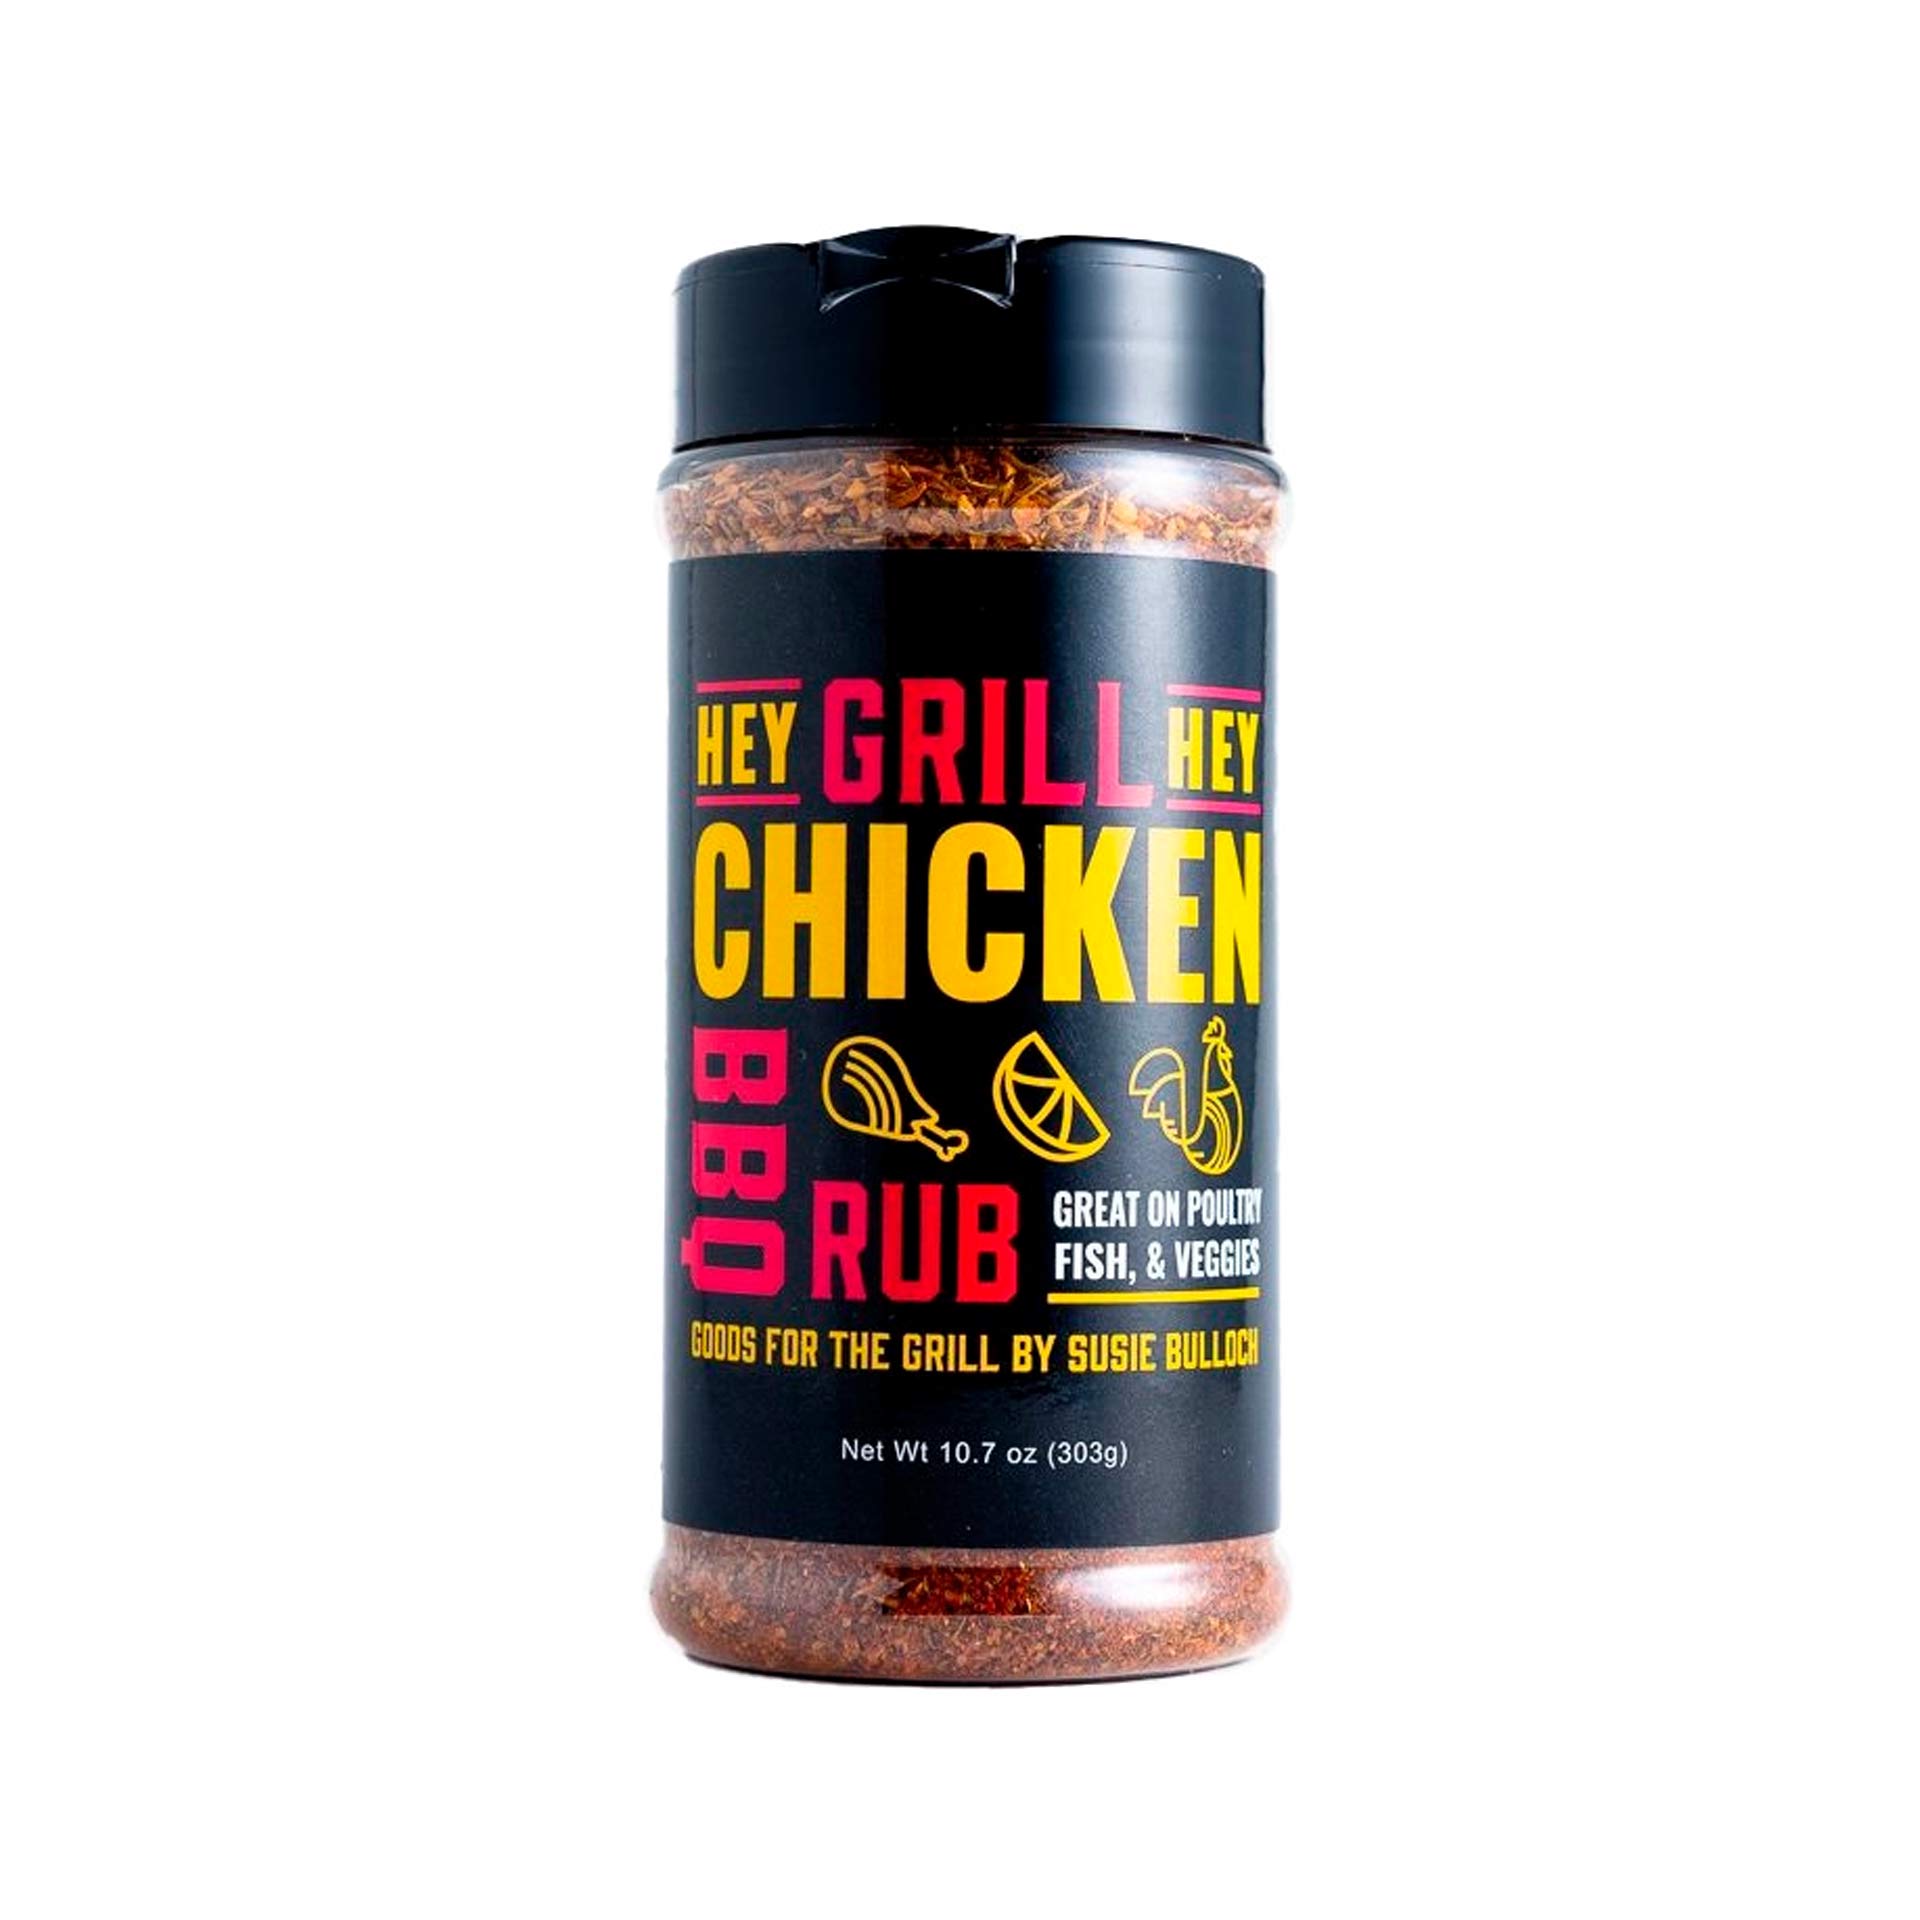 Hey Grill Hey Chicken Rub Herbs & Spices 12042851